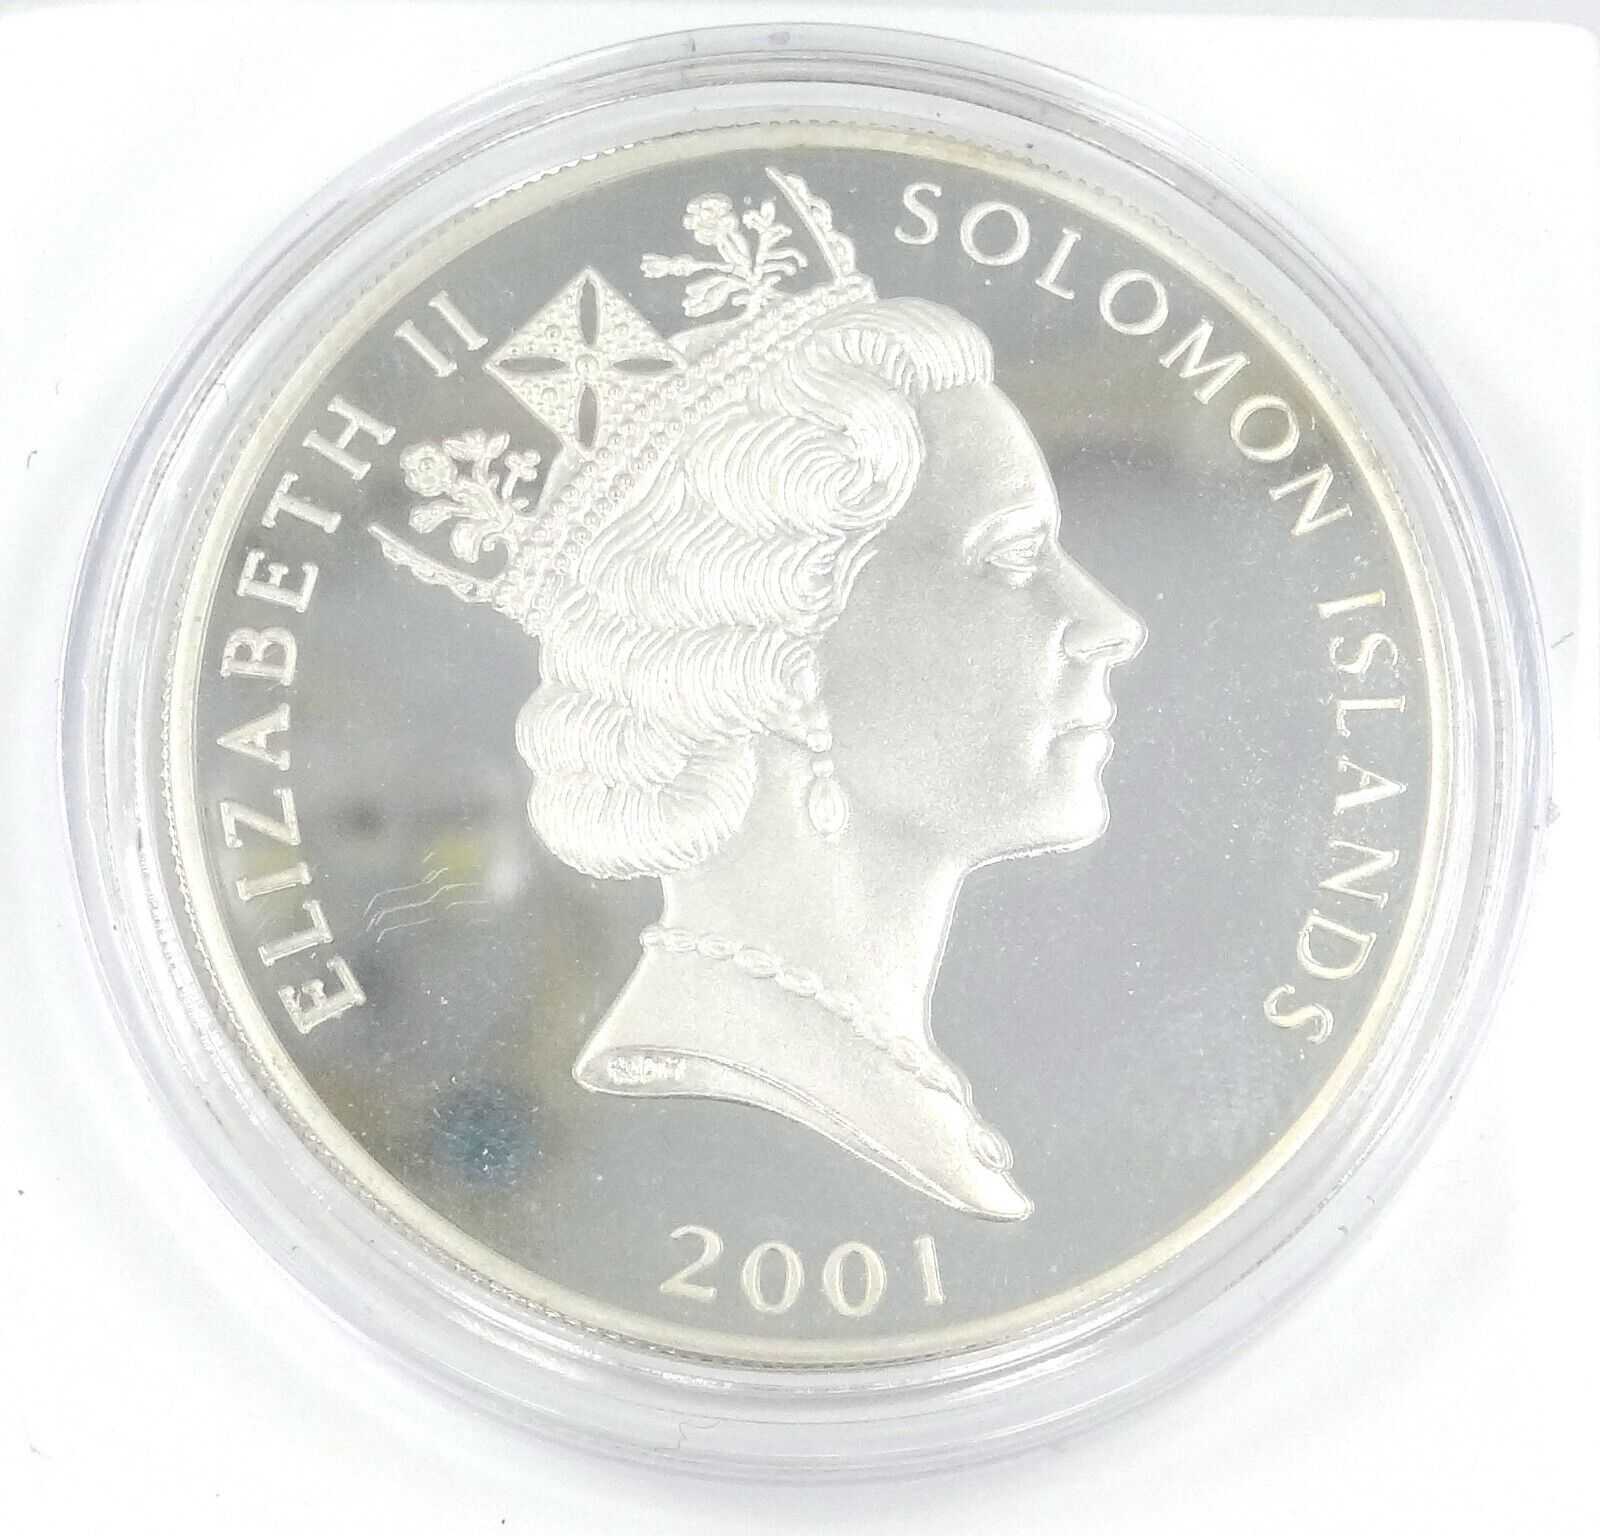 25g Silver Coin 2001 $5 Solomon Islands Marine Life Protection Fish-classypw.com-1